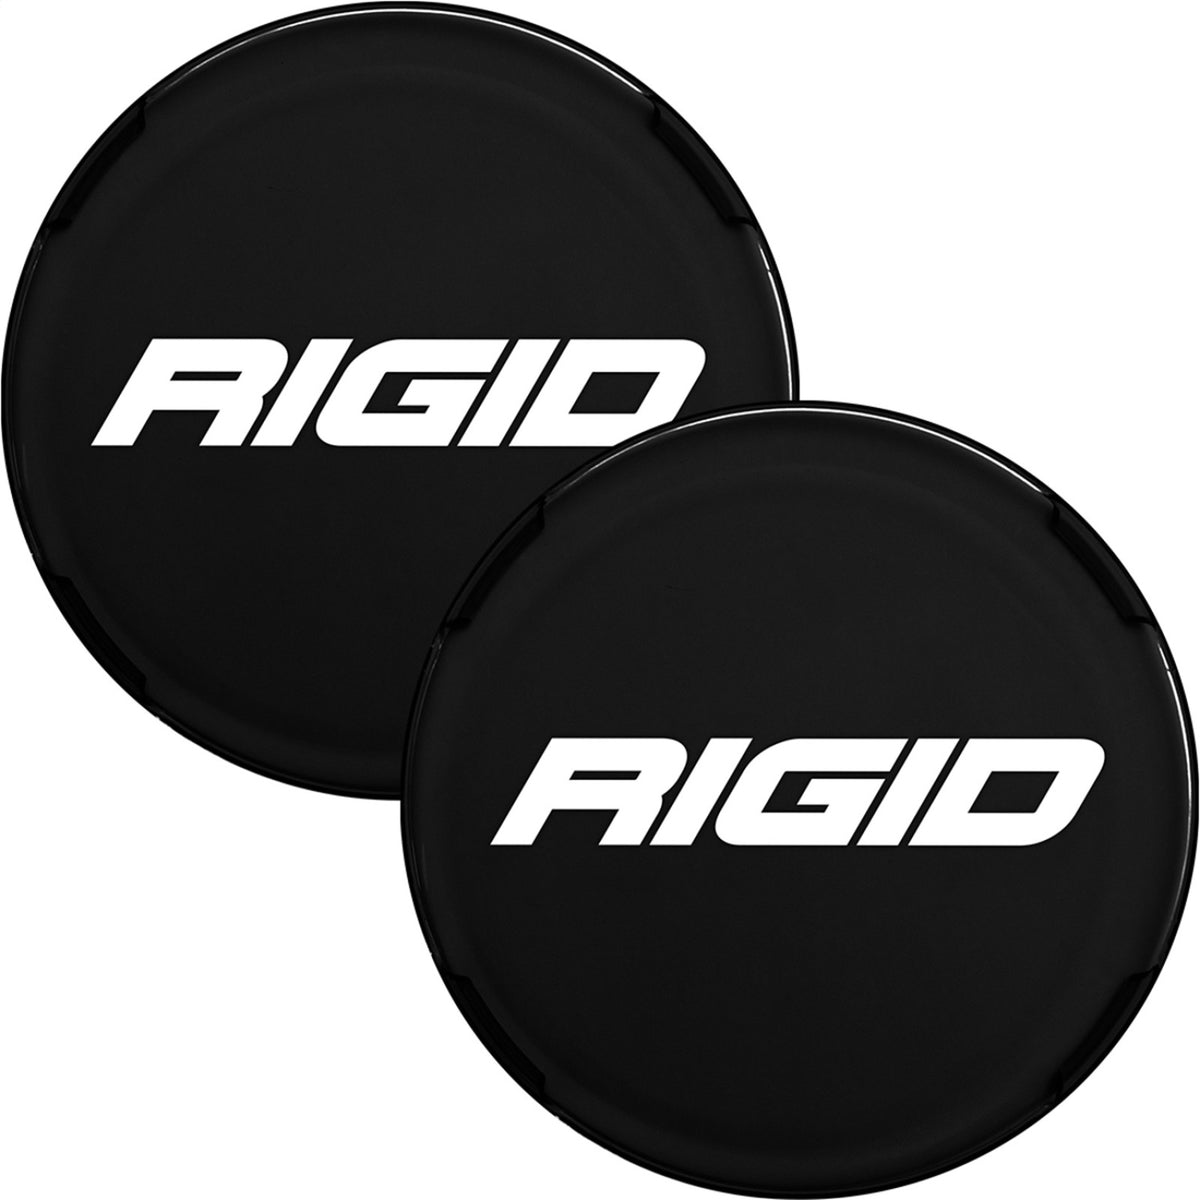 RIGID Industries 363665 RIGID Light Cover For 360-Series 6 Inch LED Lights, Black, Pair